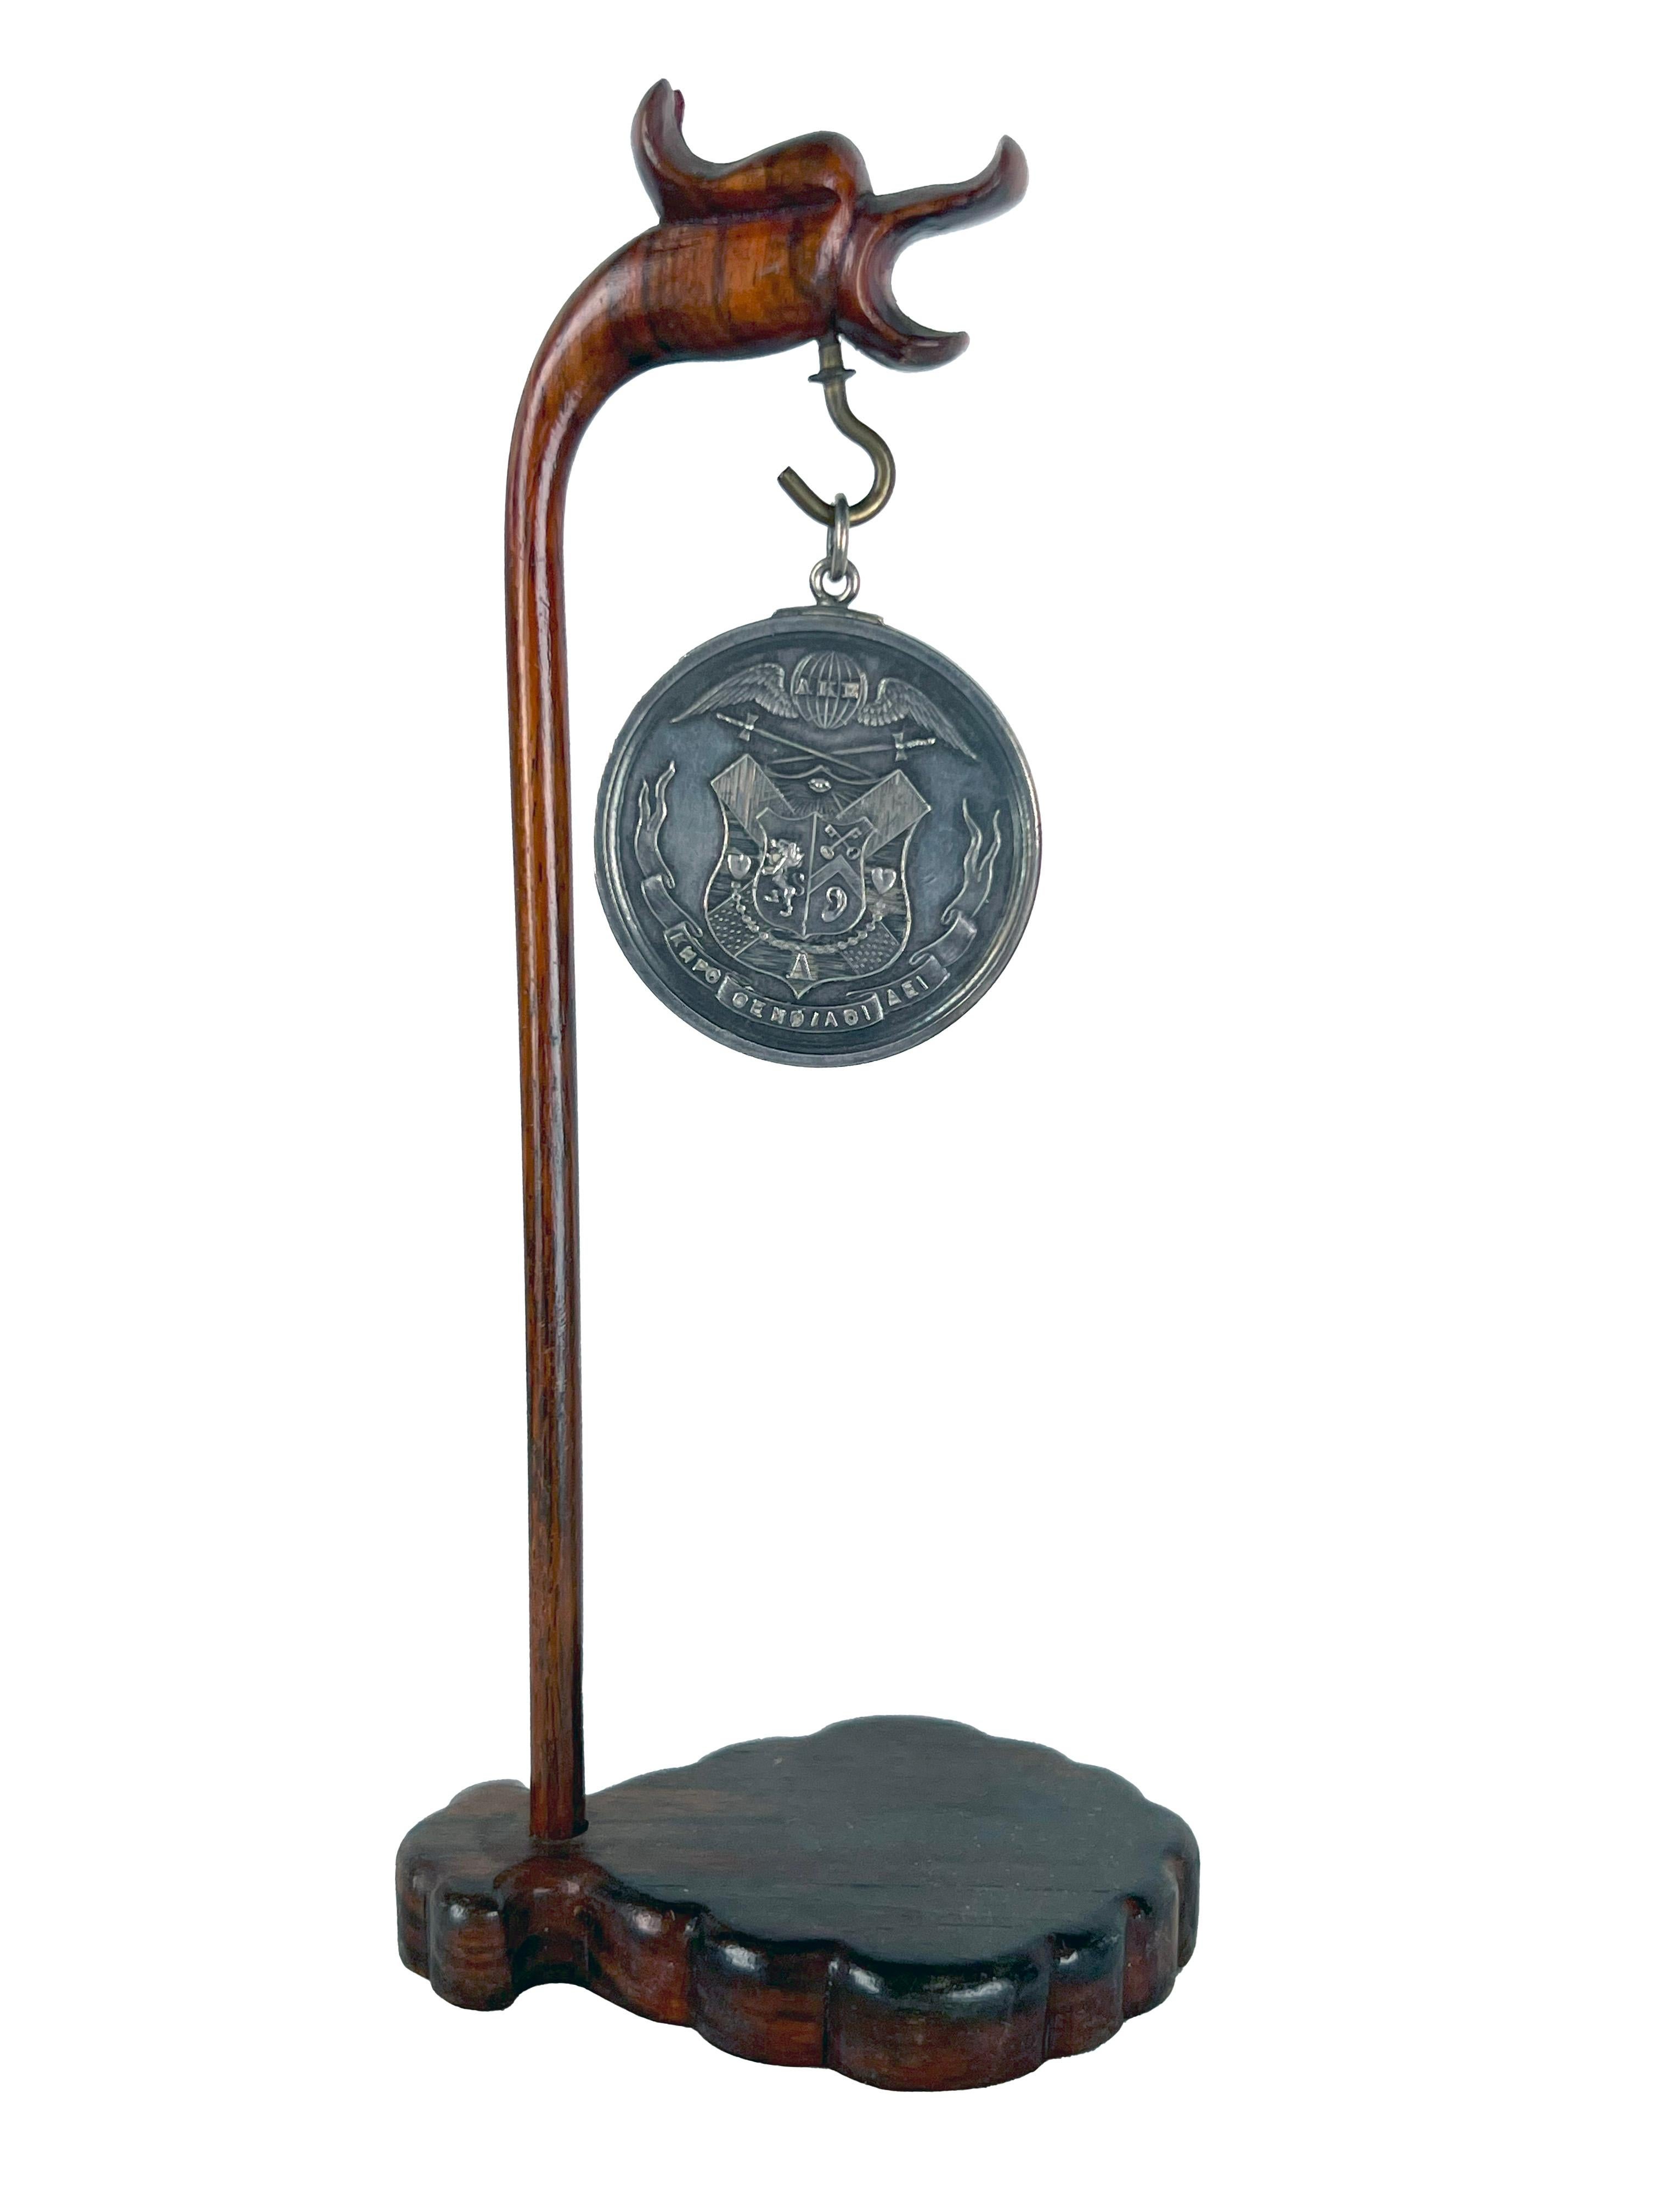  Harvard Fraternal Medallion - Delta Kappa Epsilon DKE 1877 Robert P. Hastings  In Good Condition For Sale In Soquel, CA